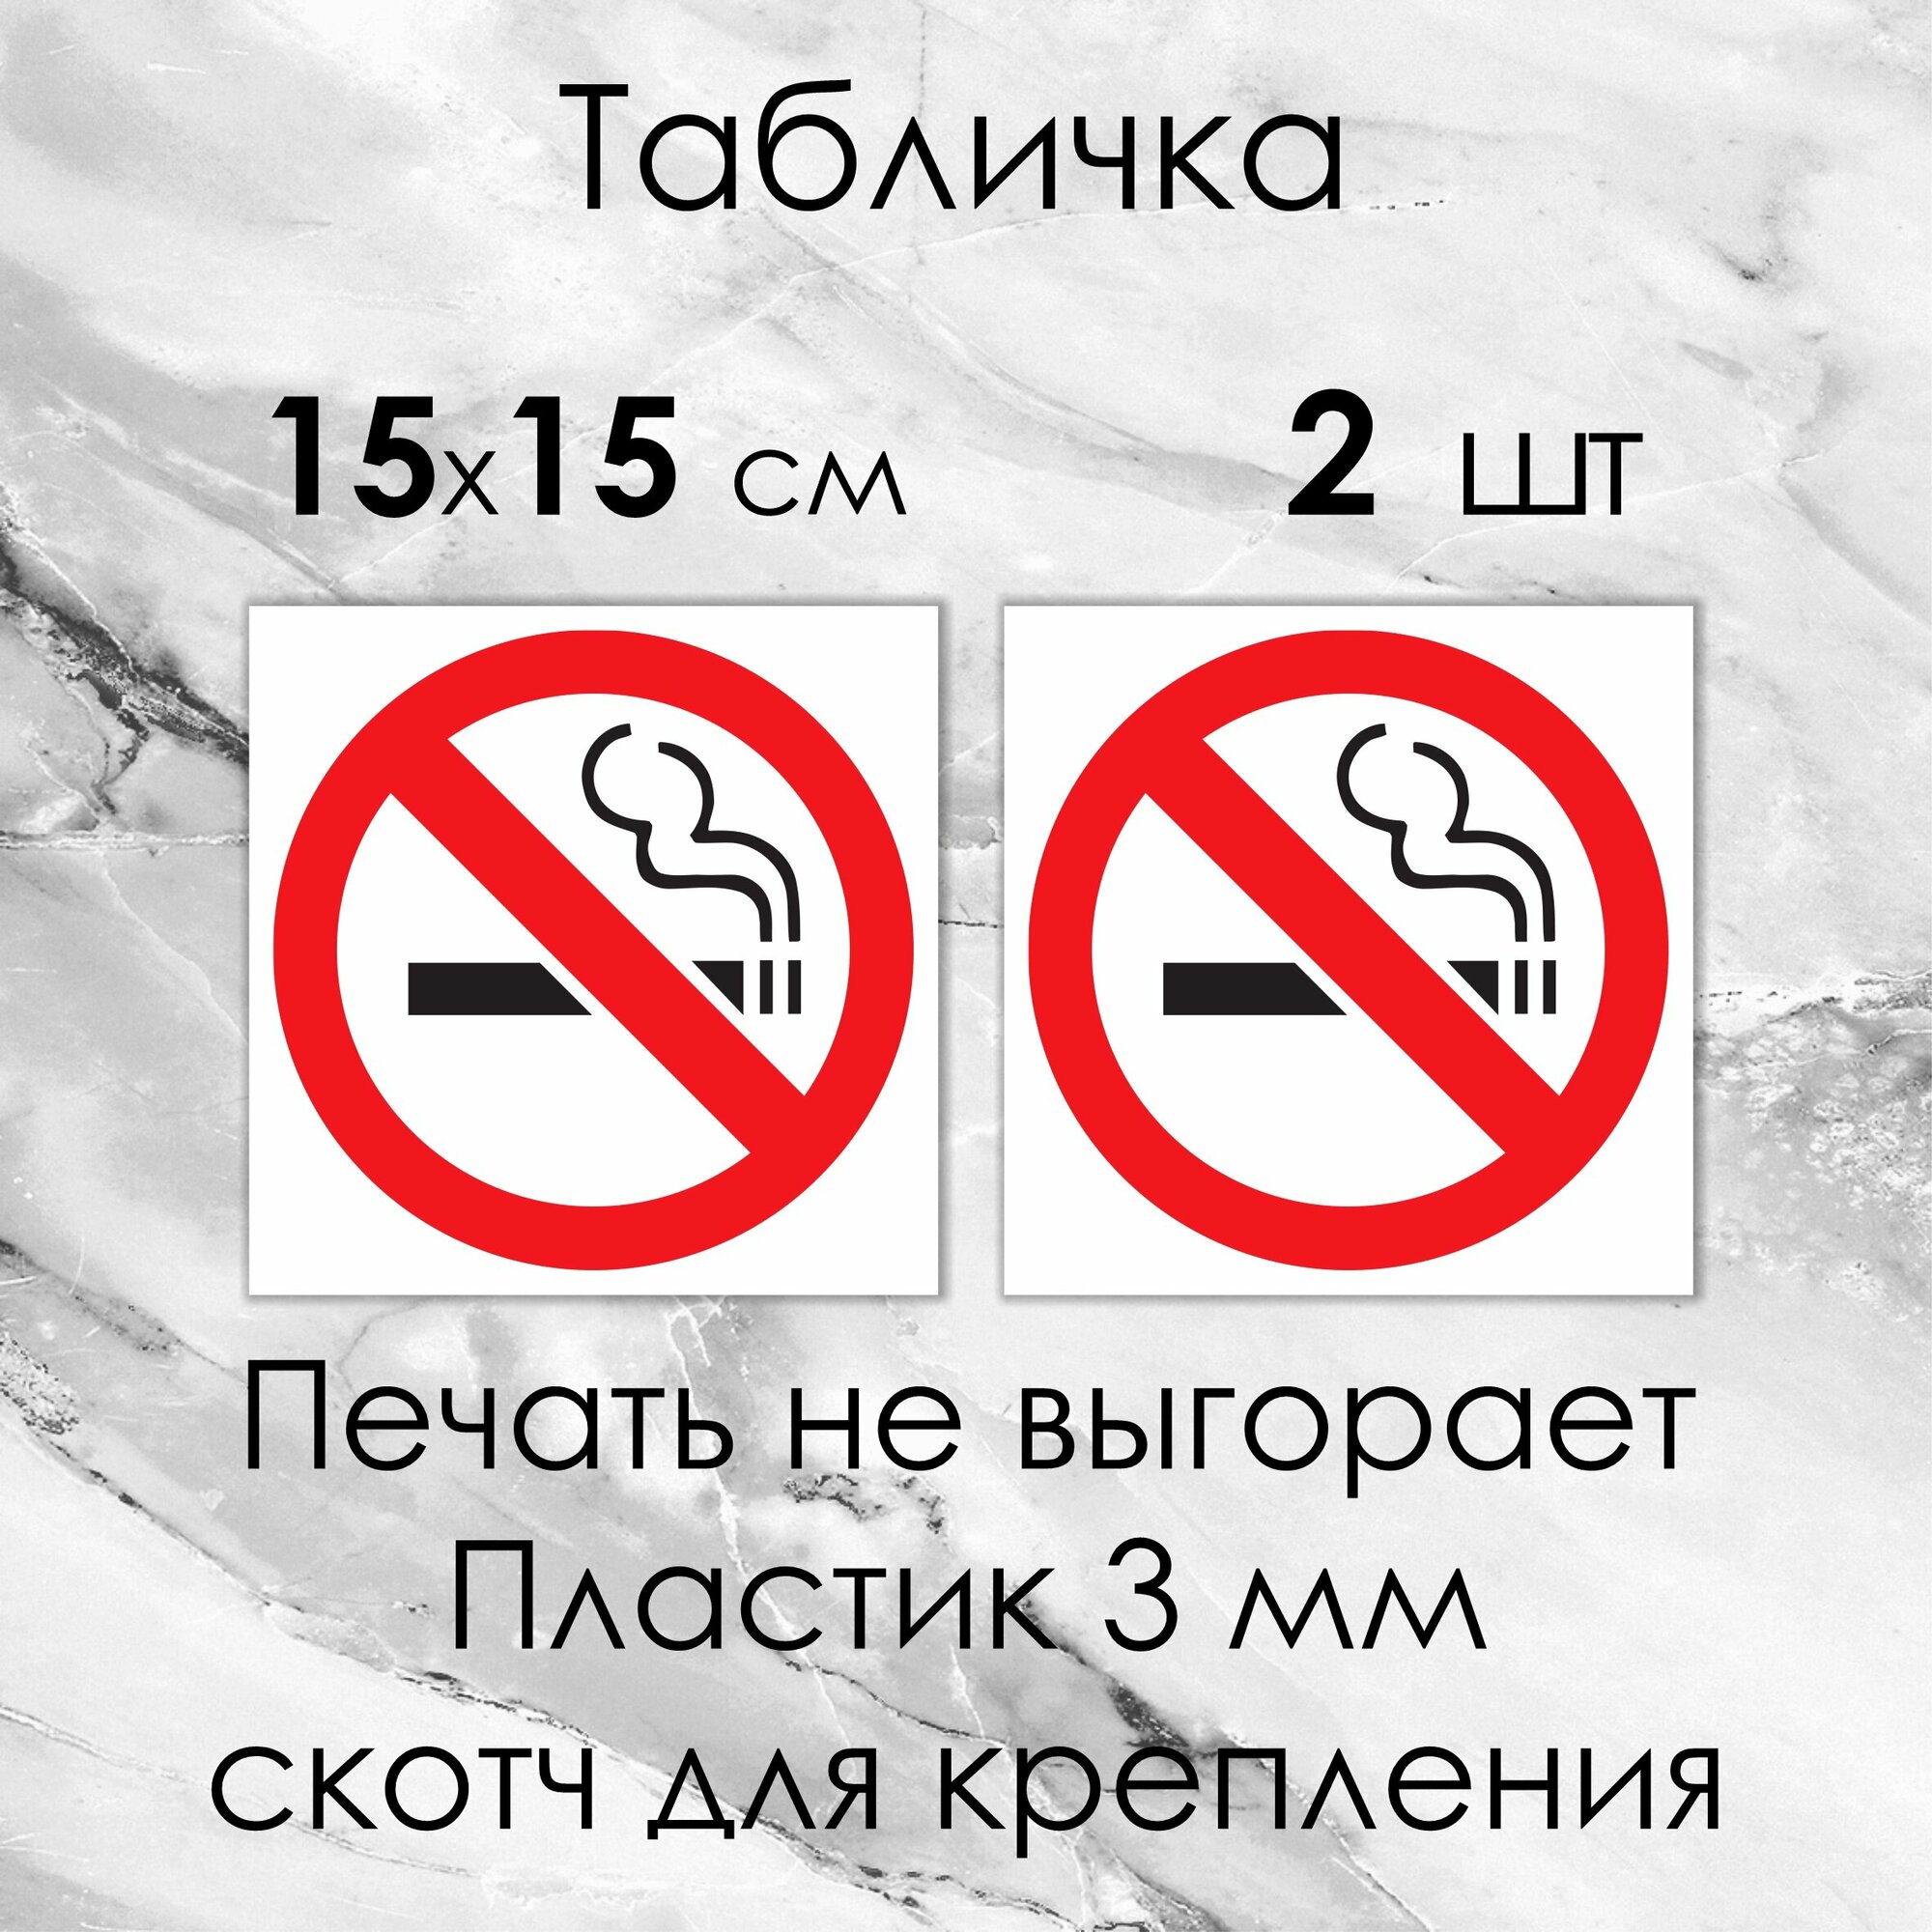 Знак Табличка Курение Запрещено